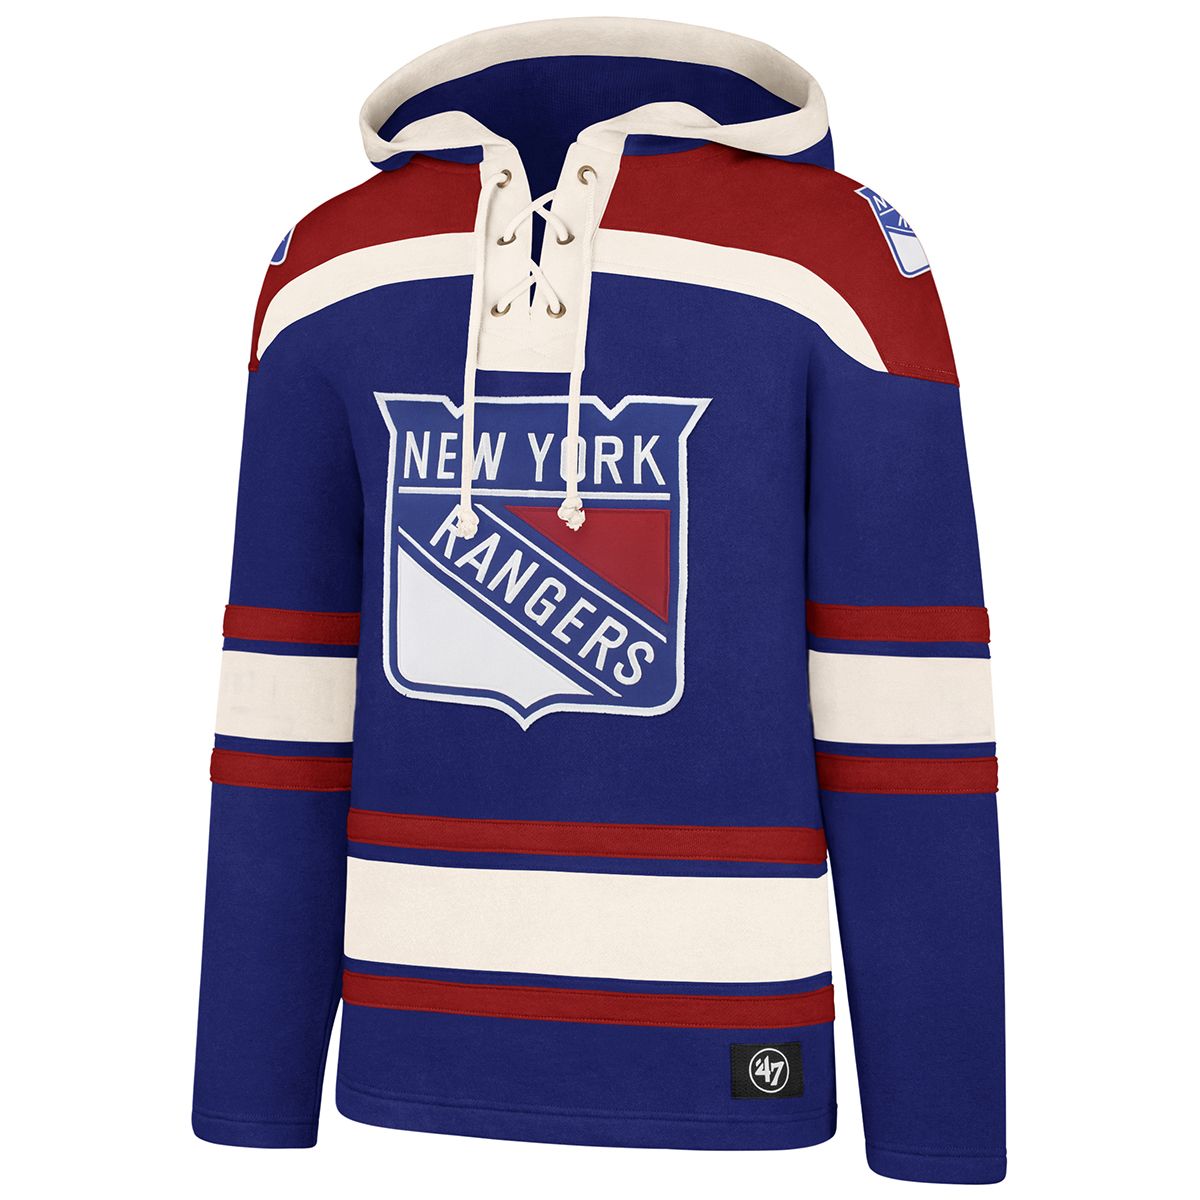 New York Rangers Dress